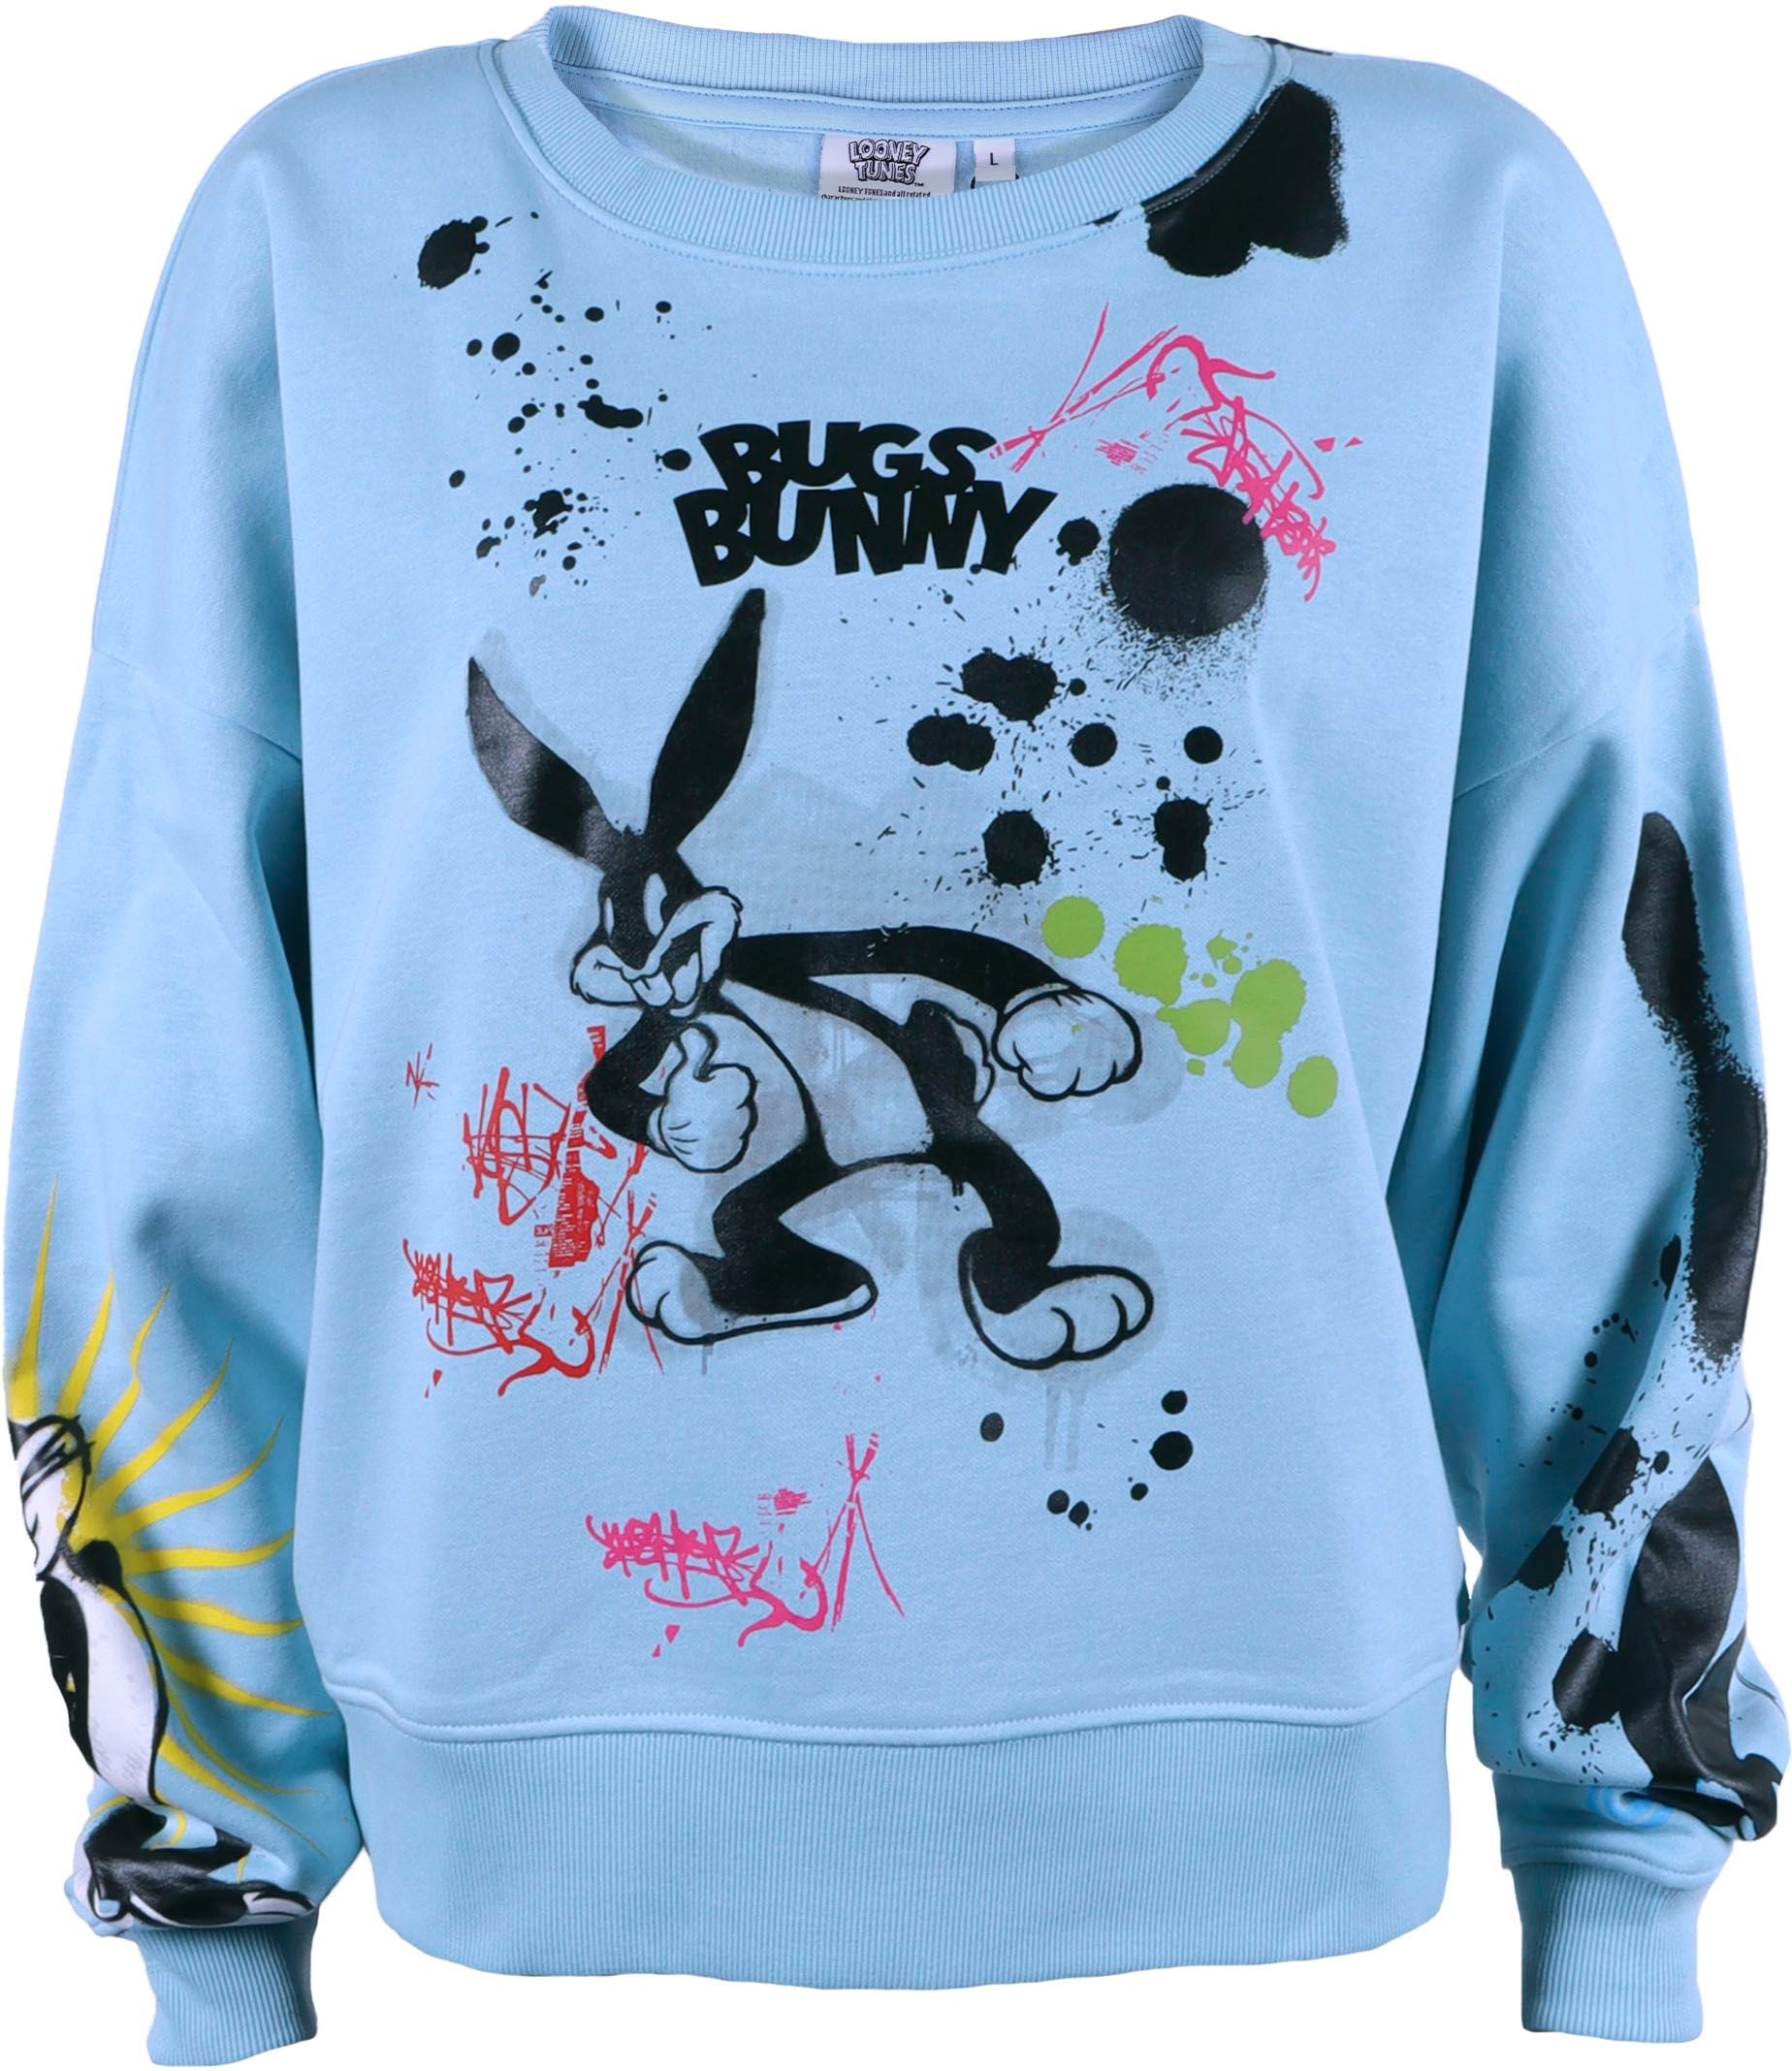 Capelli »Bugs New Sweater New bei Oversized Bunny«, York ♕ York Sweatshirt Capelli